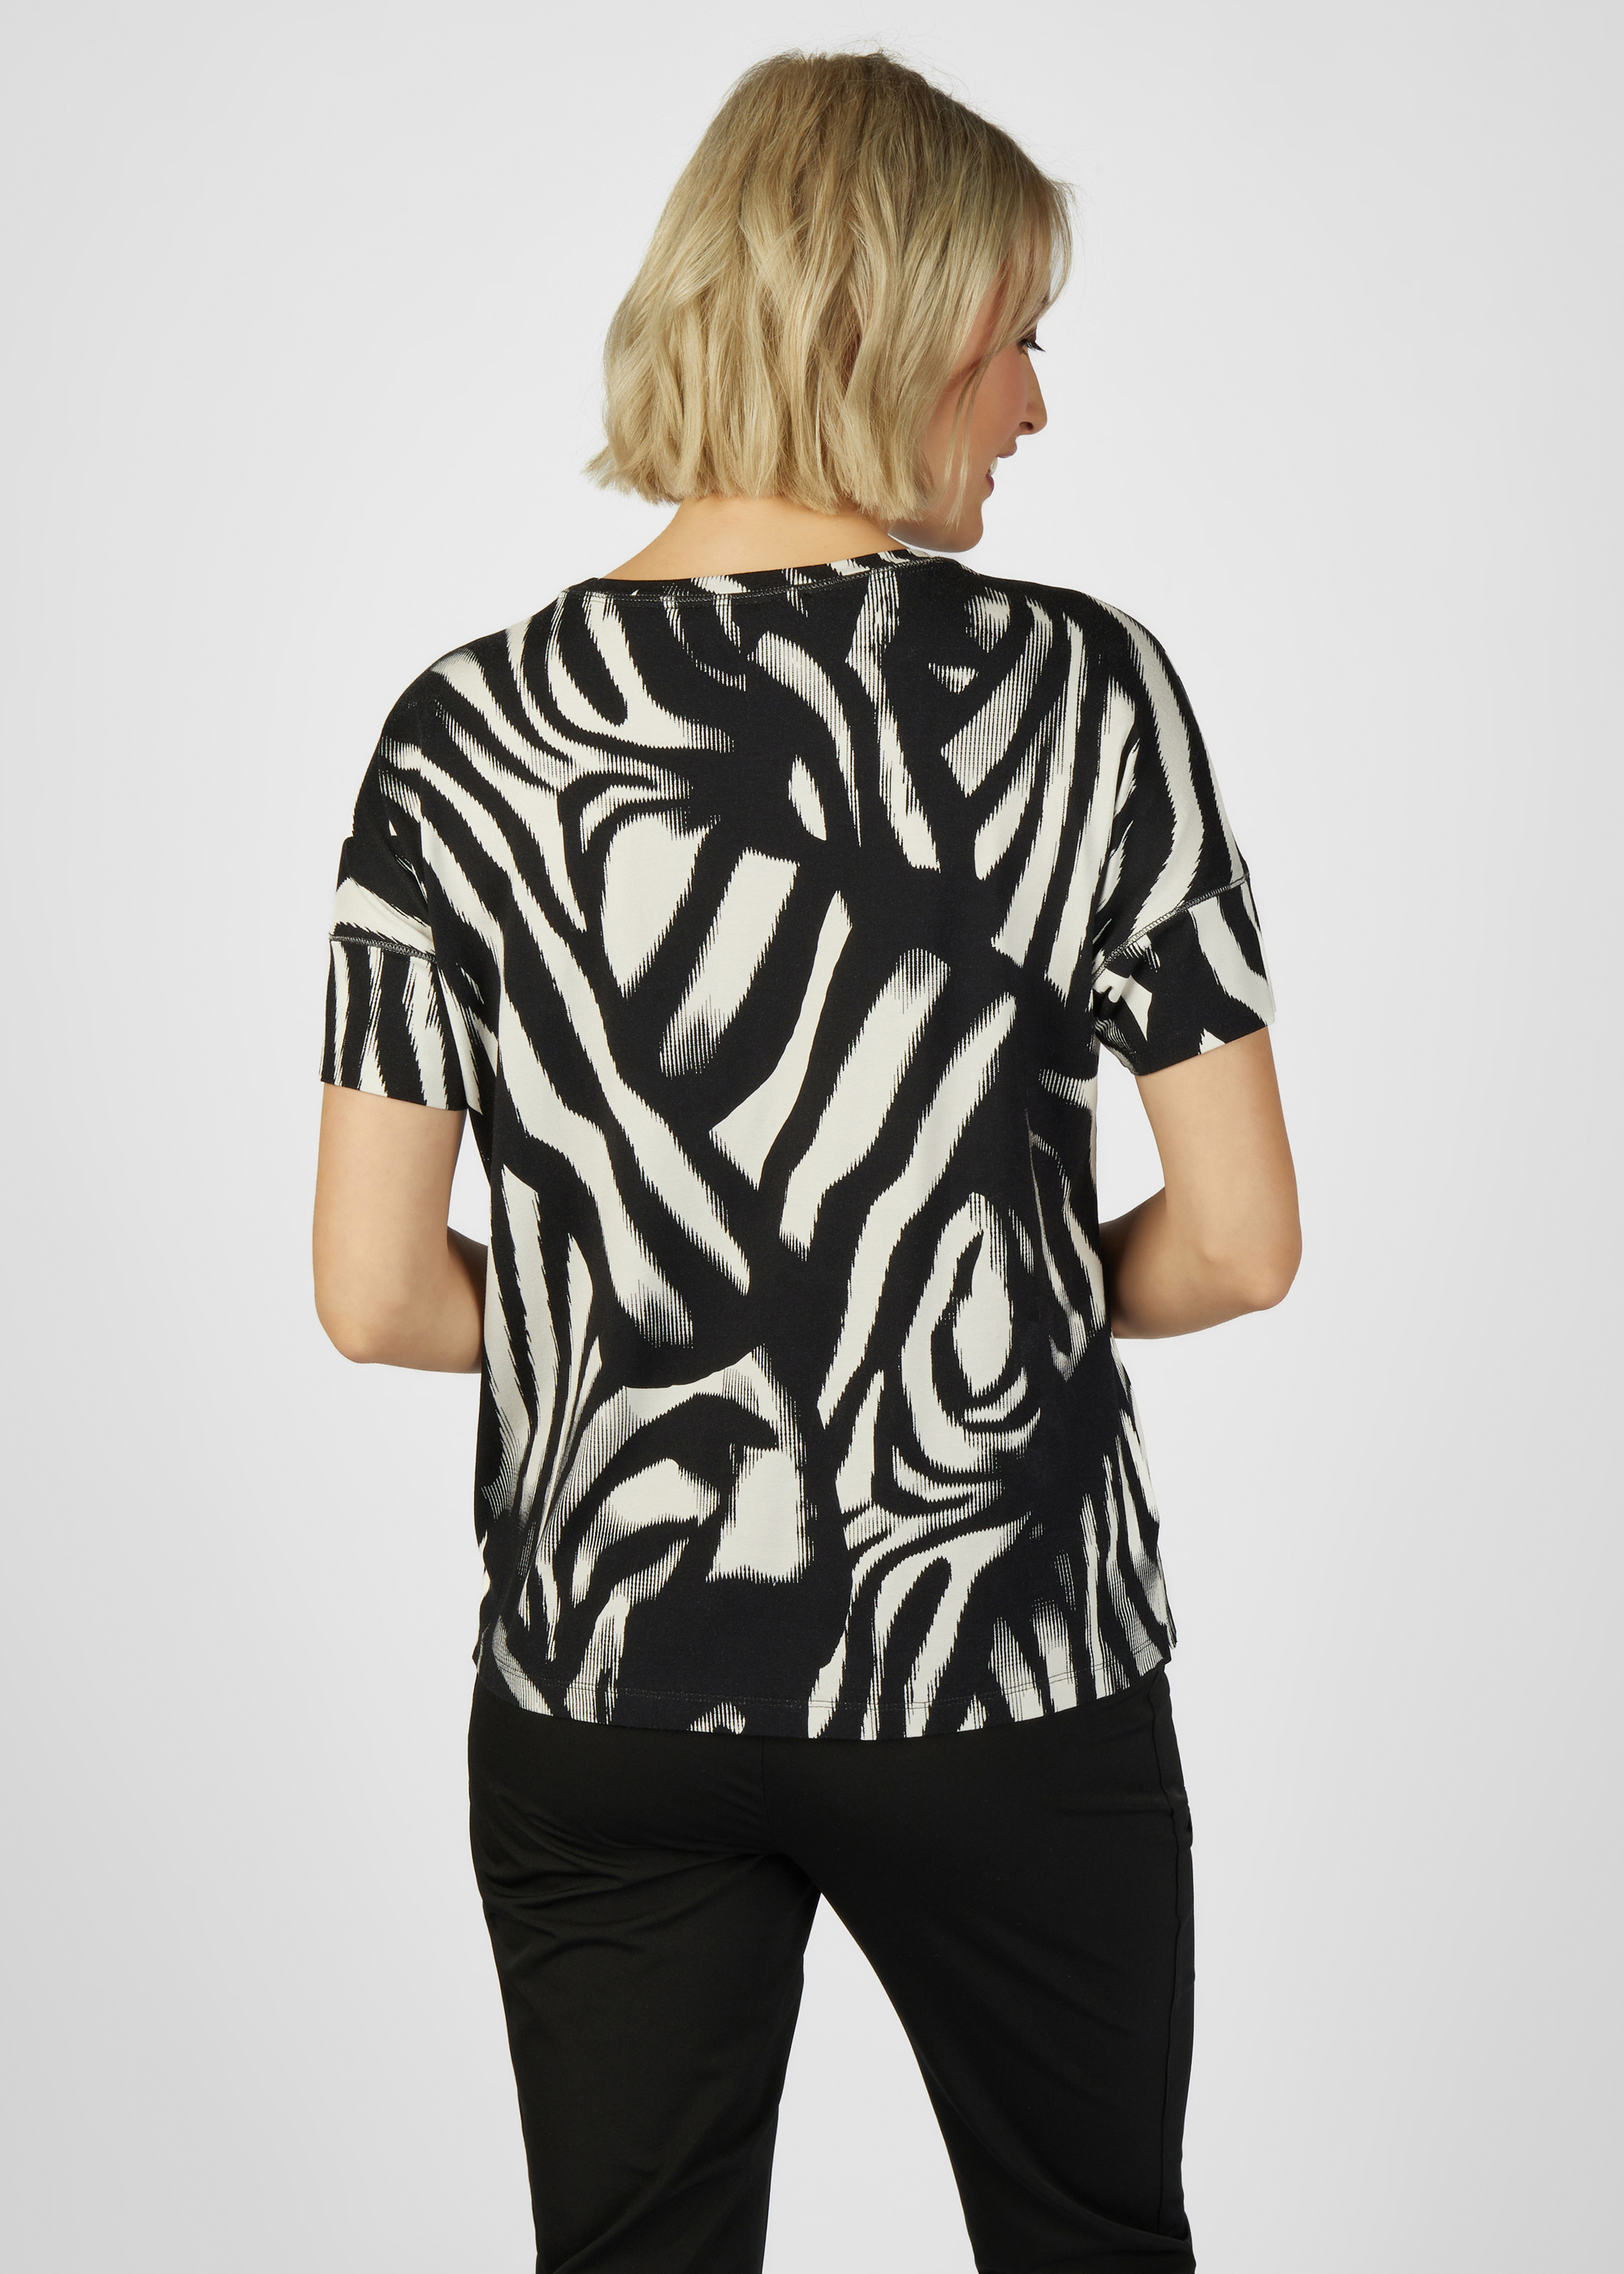 T-Shirt im Zebra Look